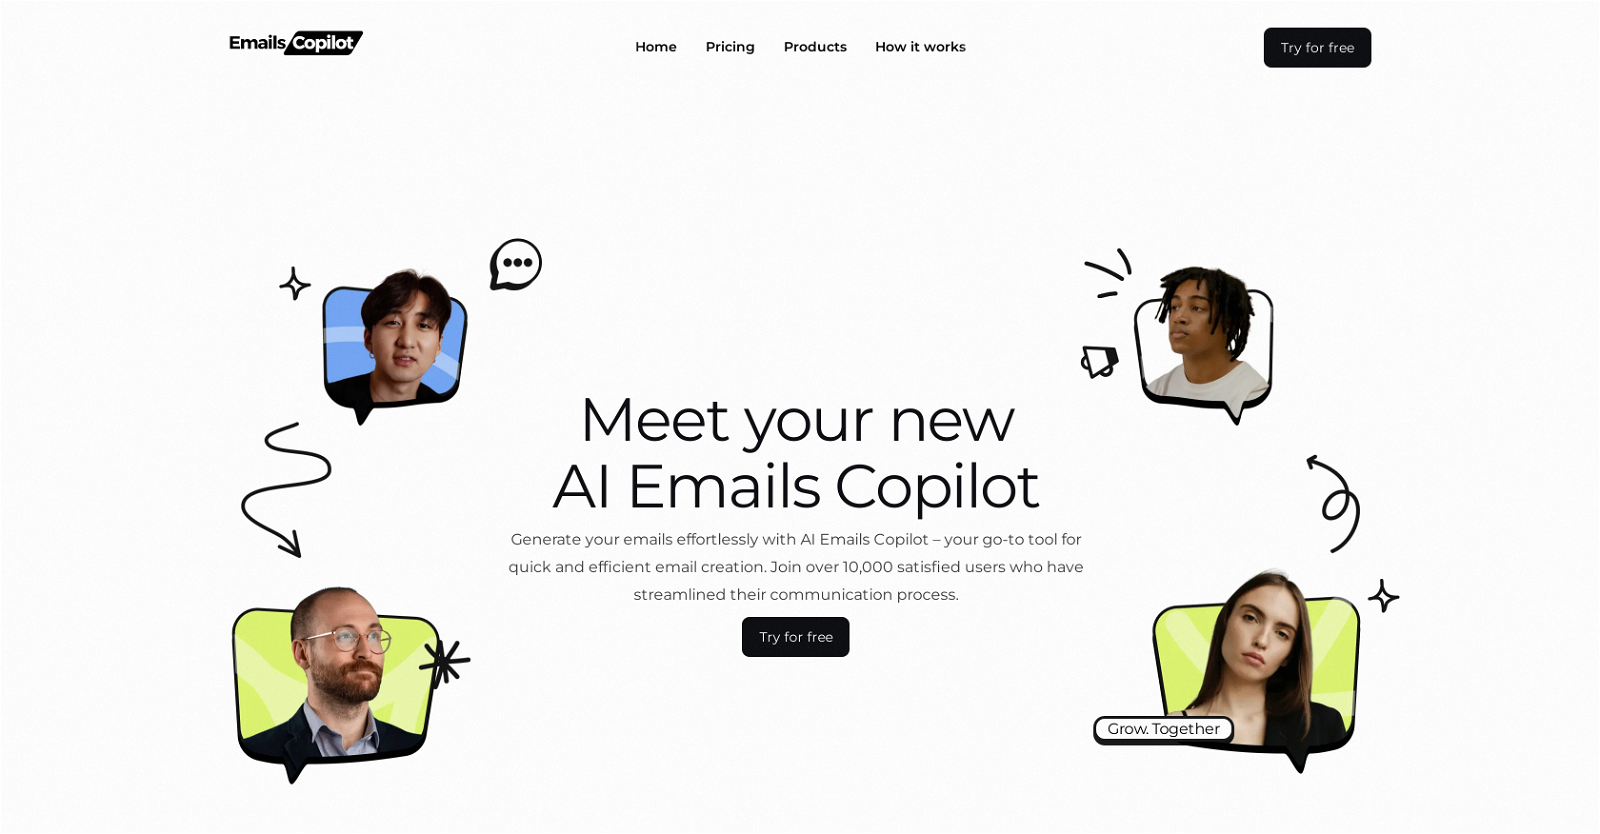 Emails Copilot website